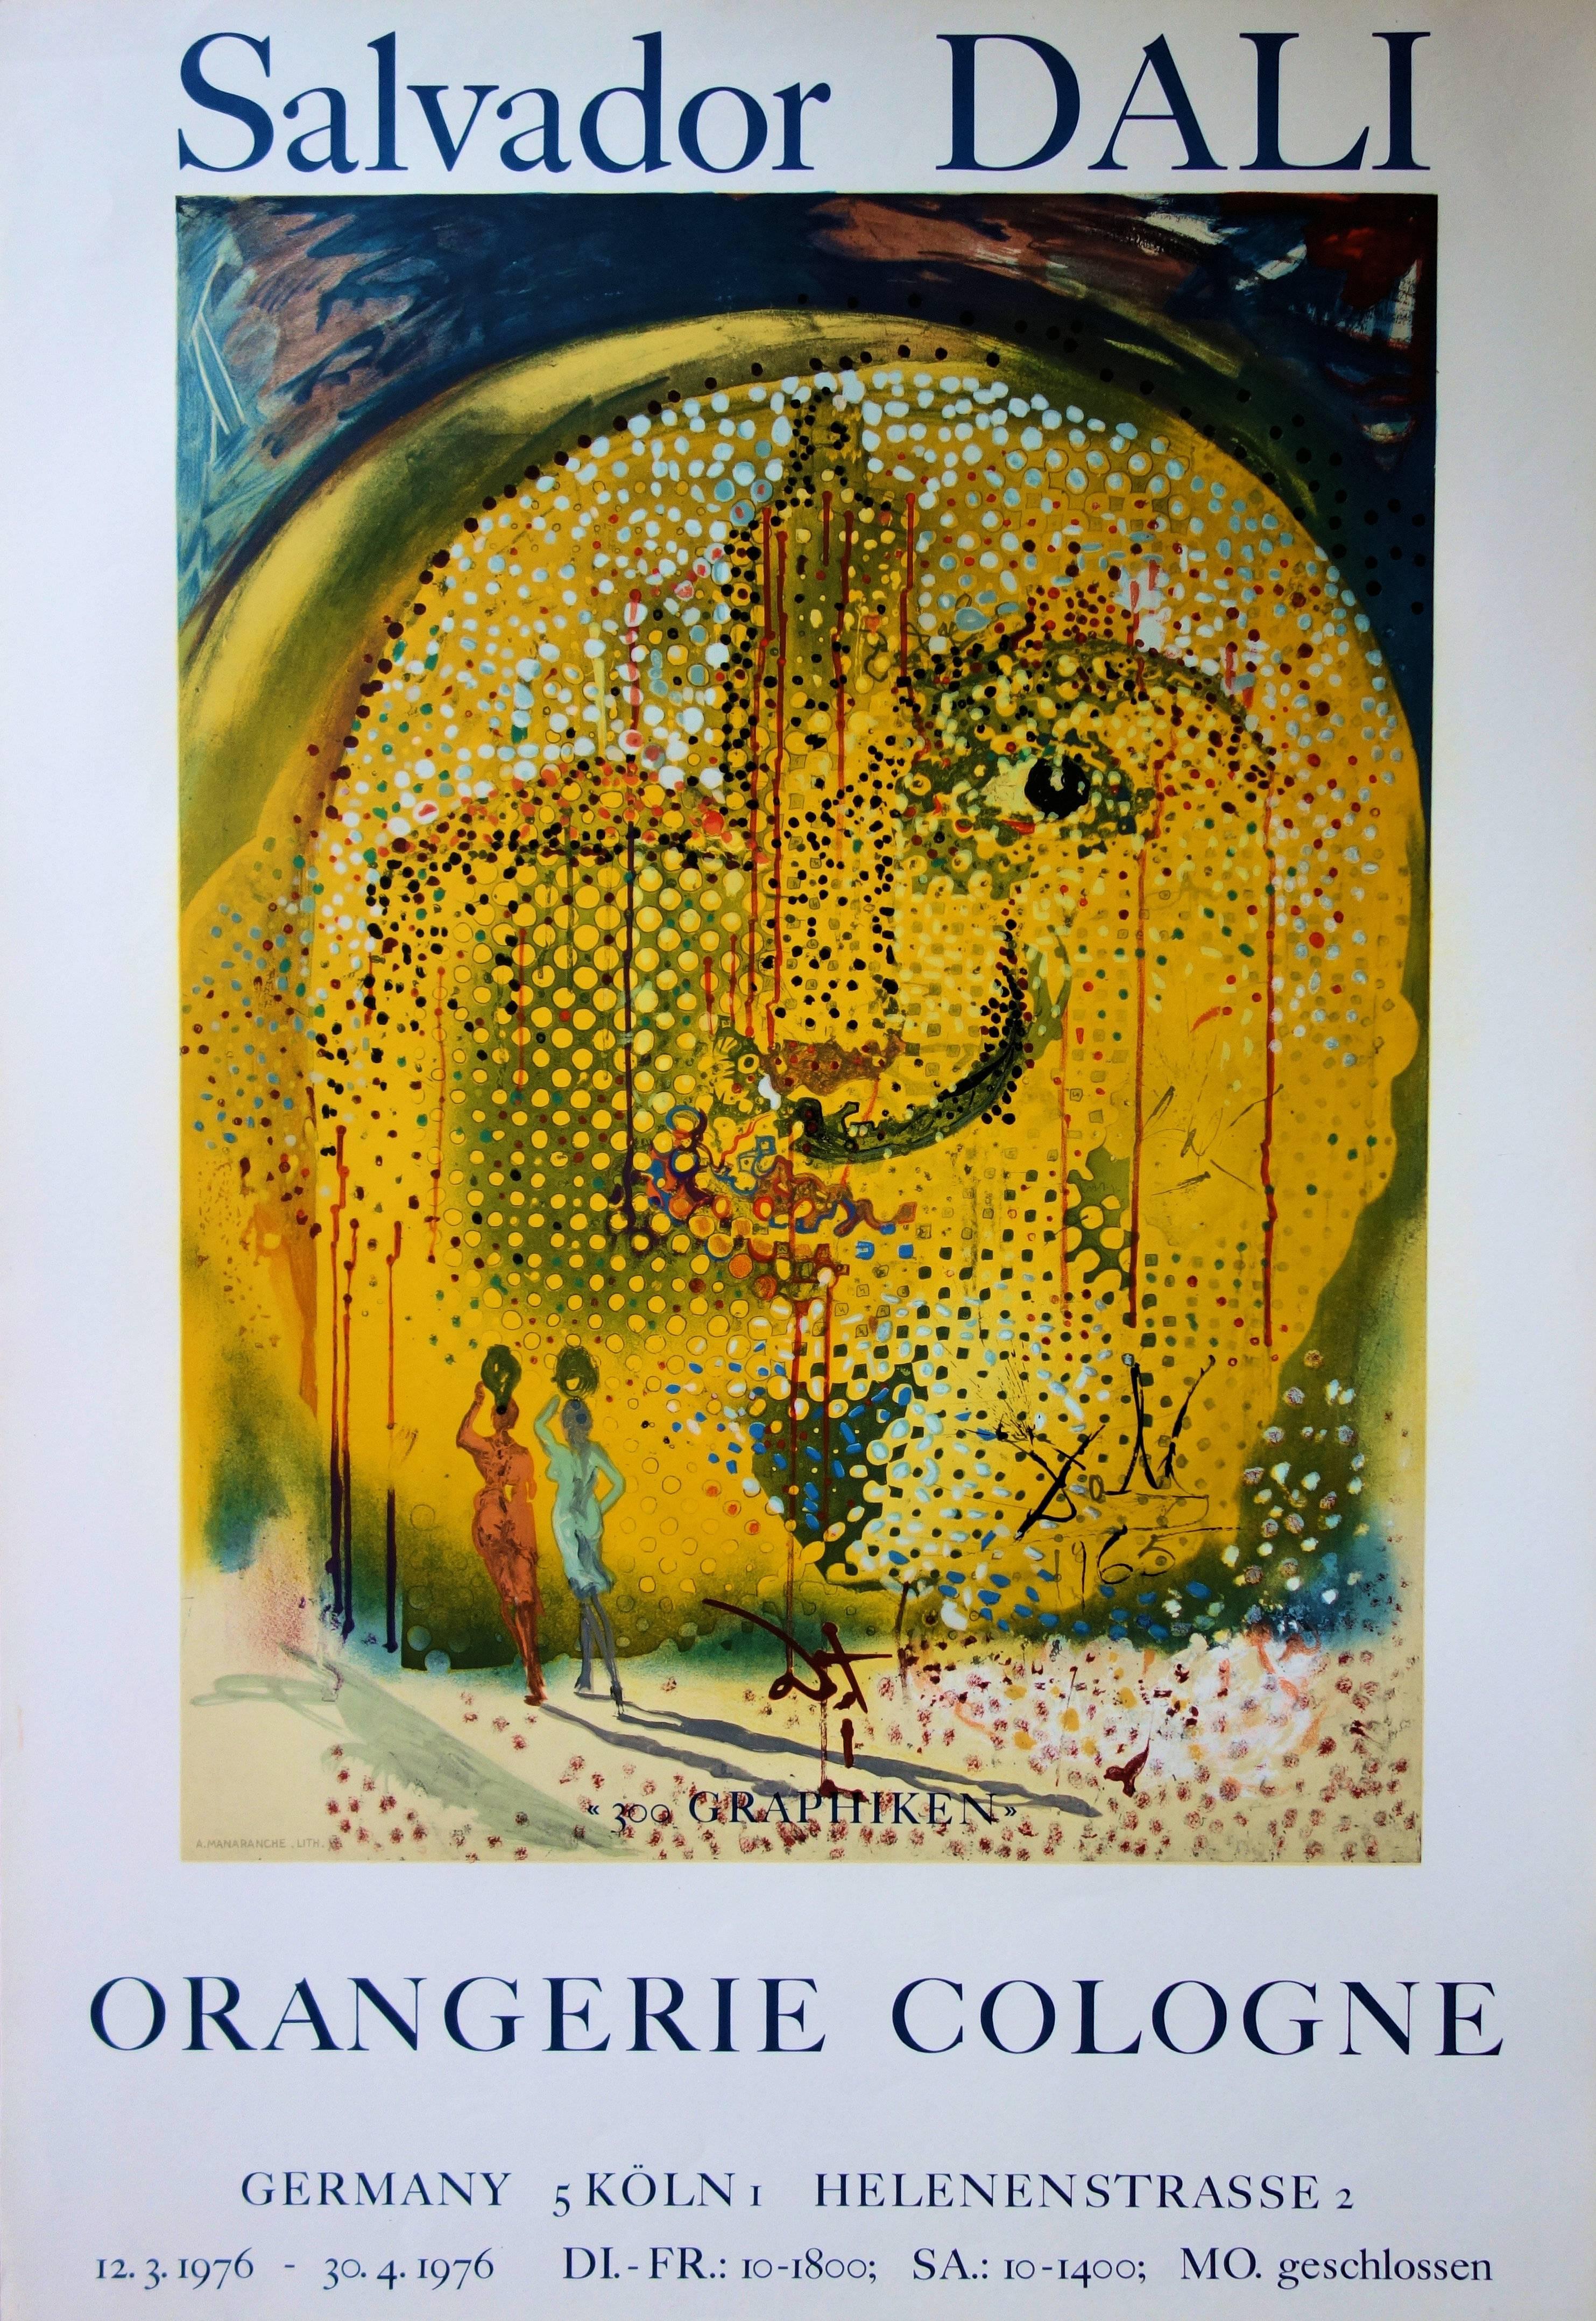 Sol y Dali - Rare Vintage Lithograph Poster - Mourlot 1967 (Field #67-1)